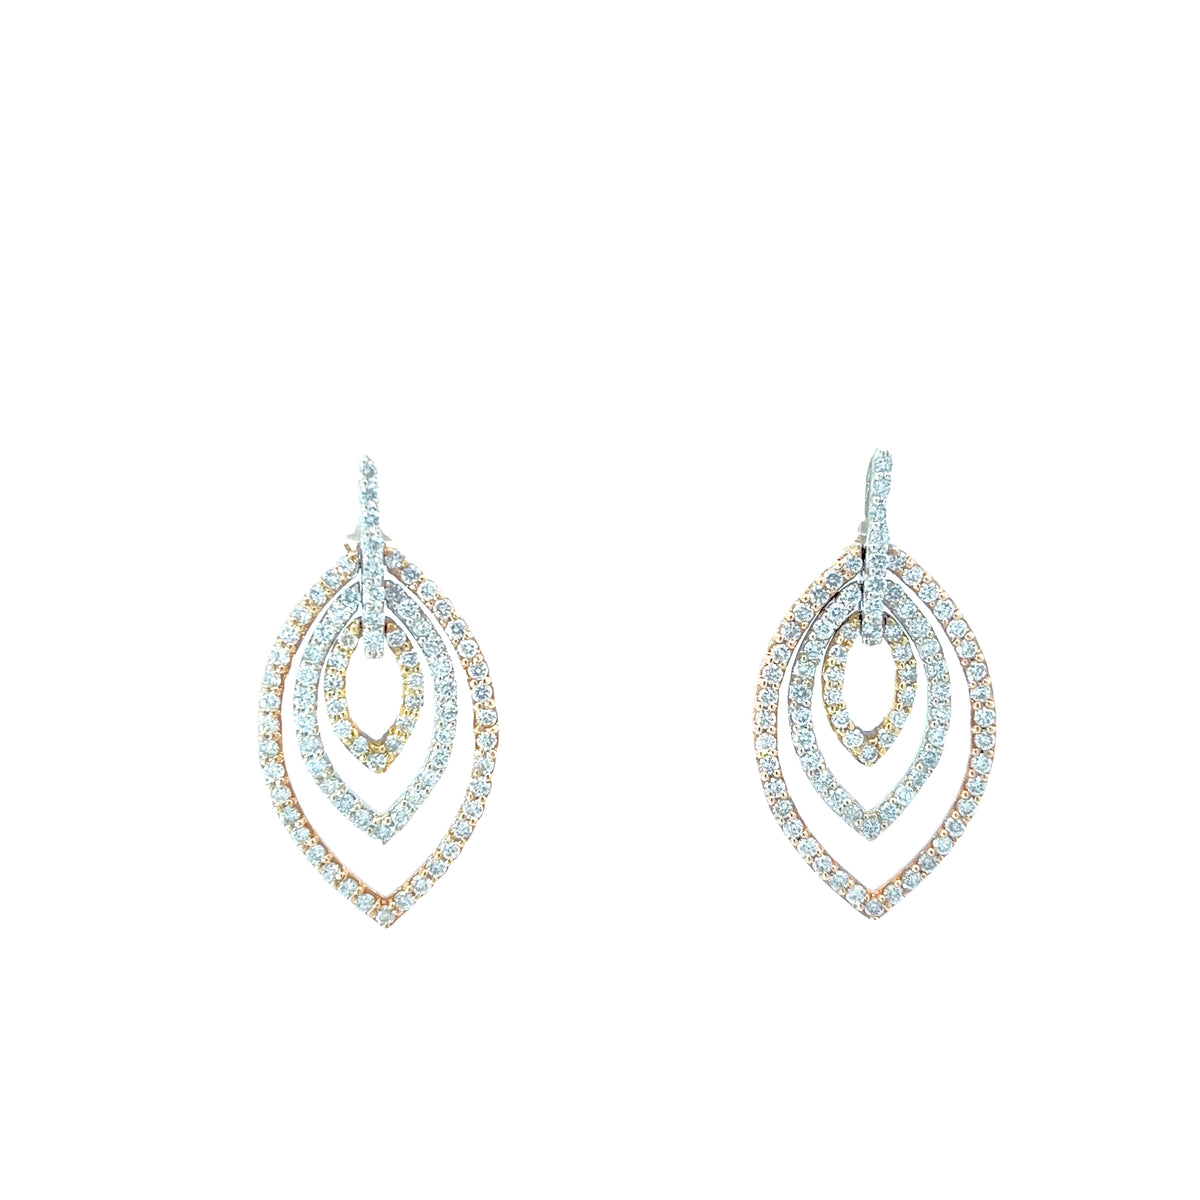 14k Tri colored 2.00ct G VS2 Round Diamond earrings